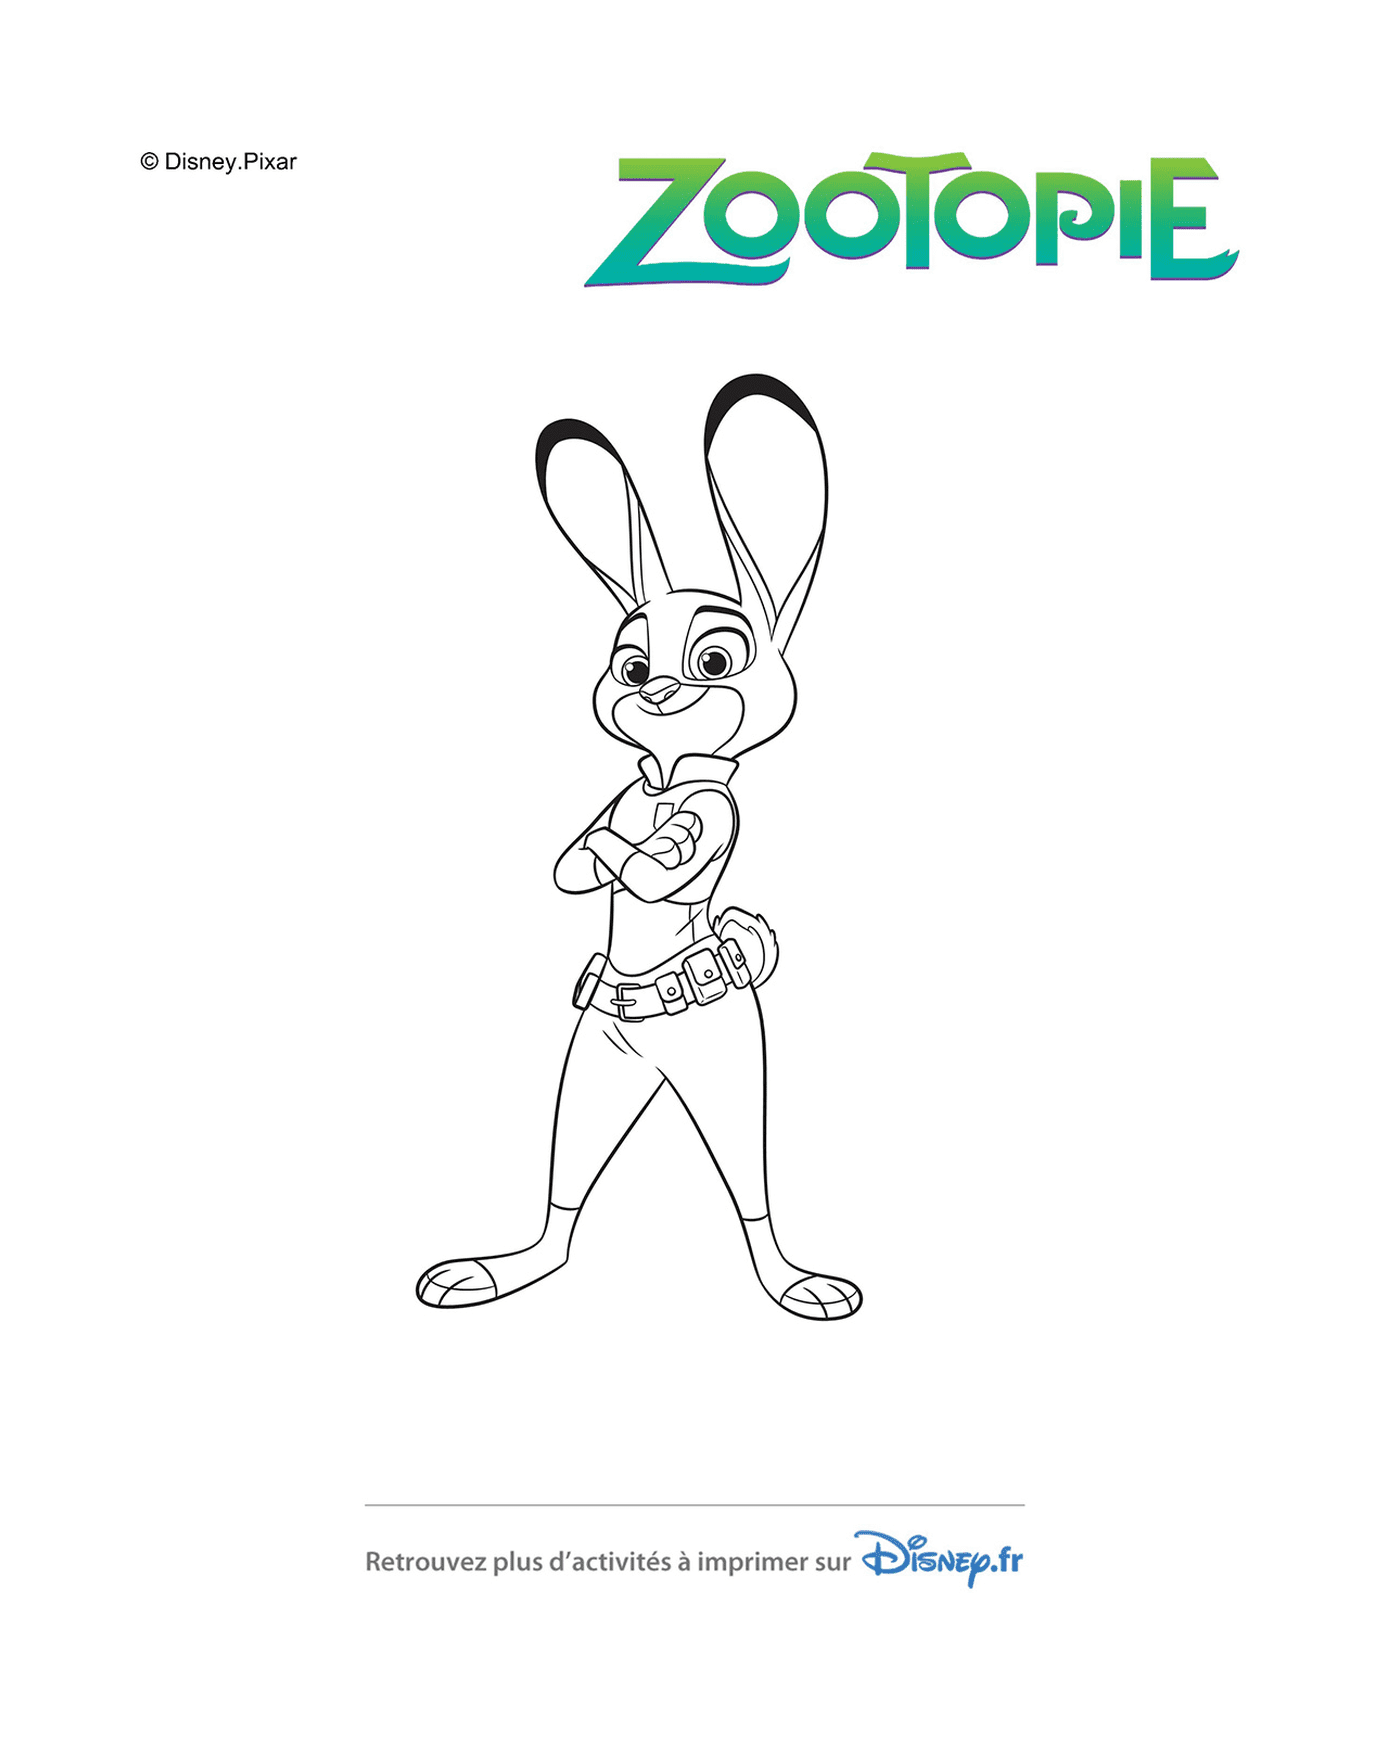  Judy Hopps, Disney Zootopie's intrepid police 